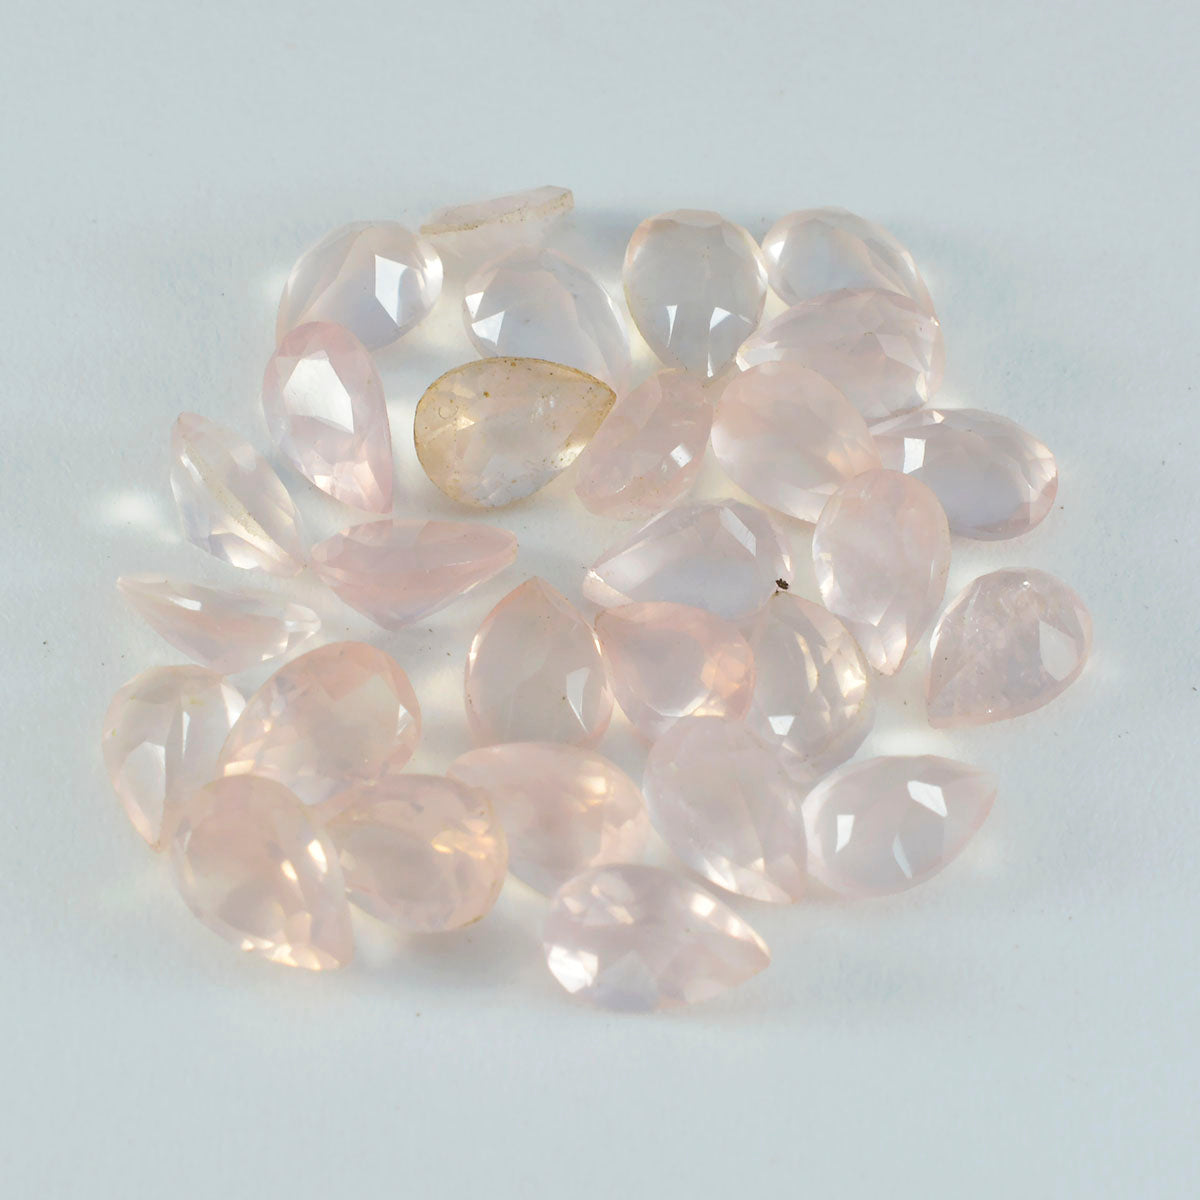 Riyogems 1PC Pink Rose Quartz Faceted 5x7 mm Pear Shape superb Quality Stone